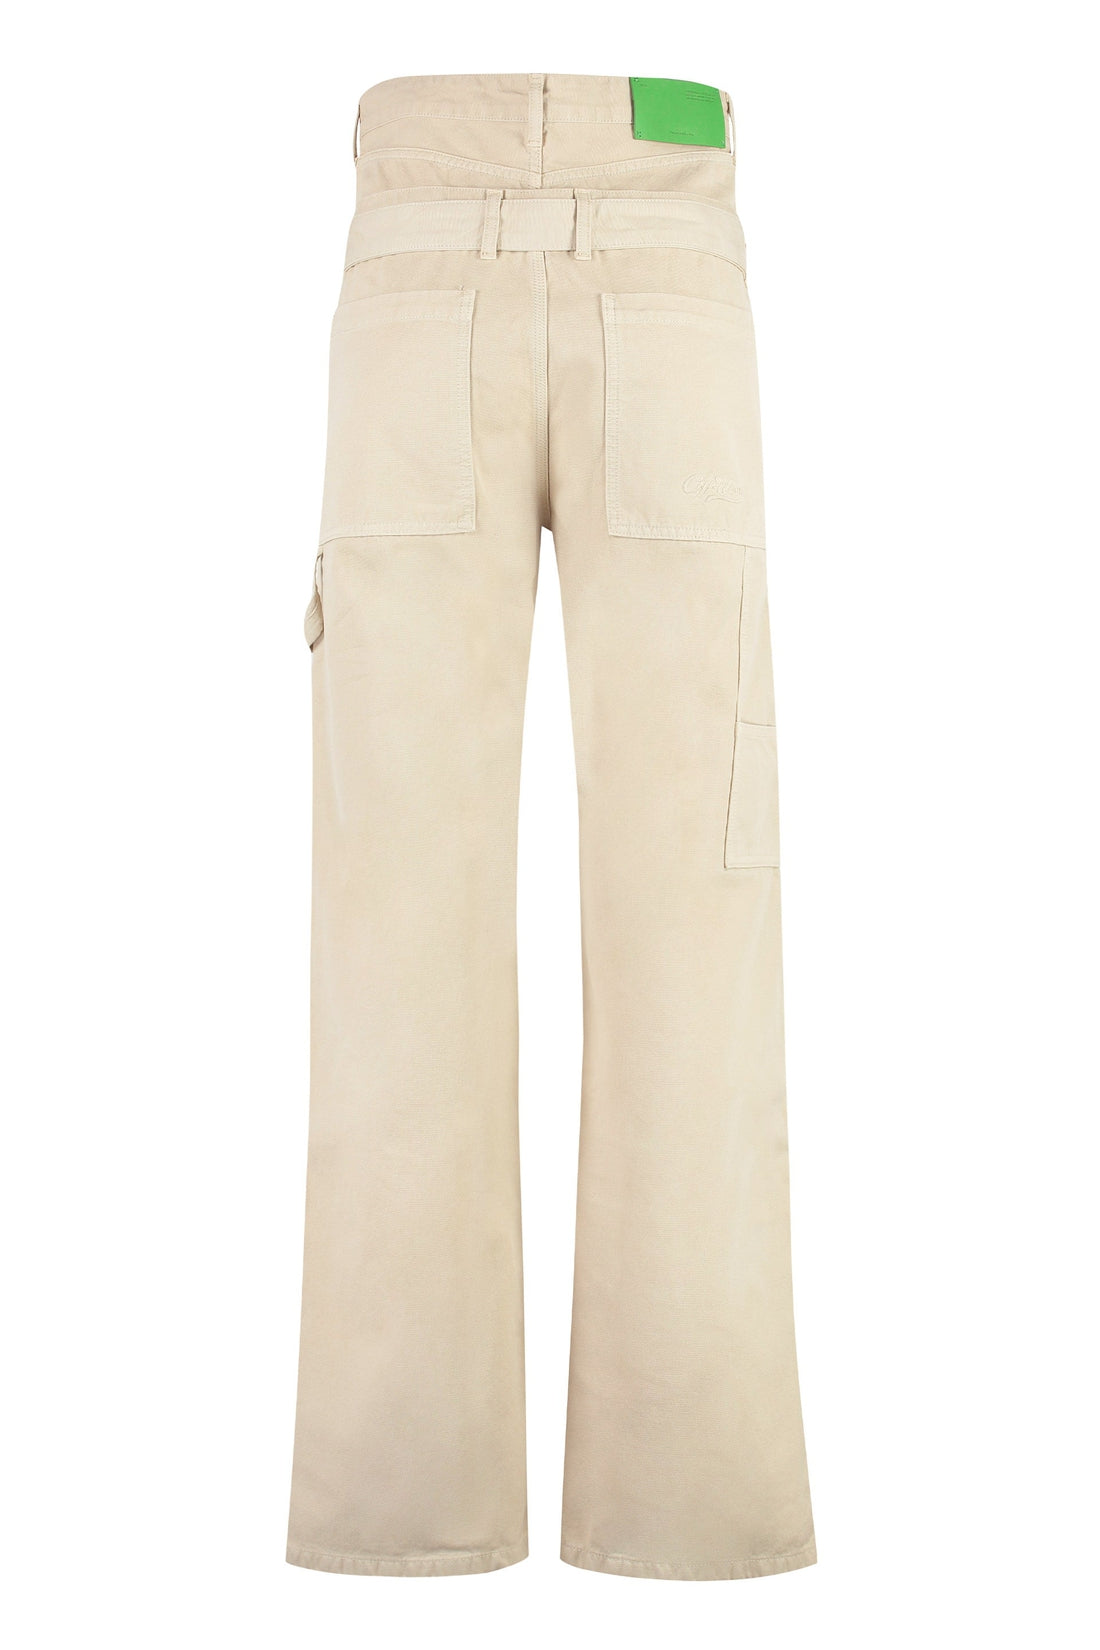 Off-White-OUTLET-SALE-Cotton trousers-ARCHIVIST